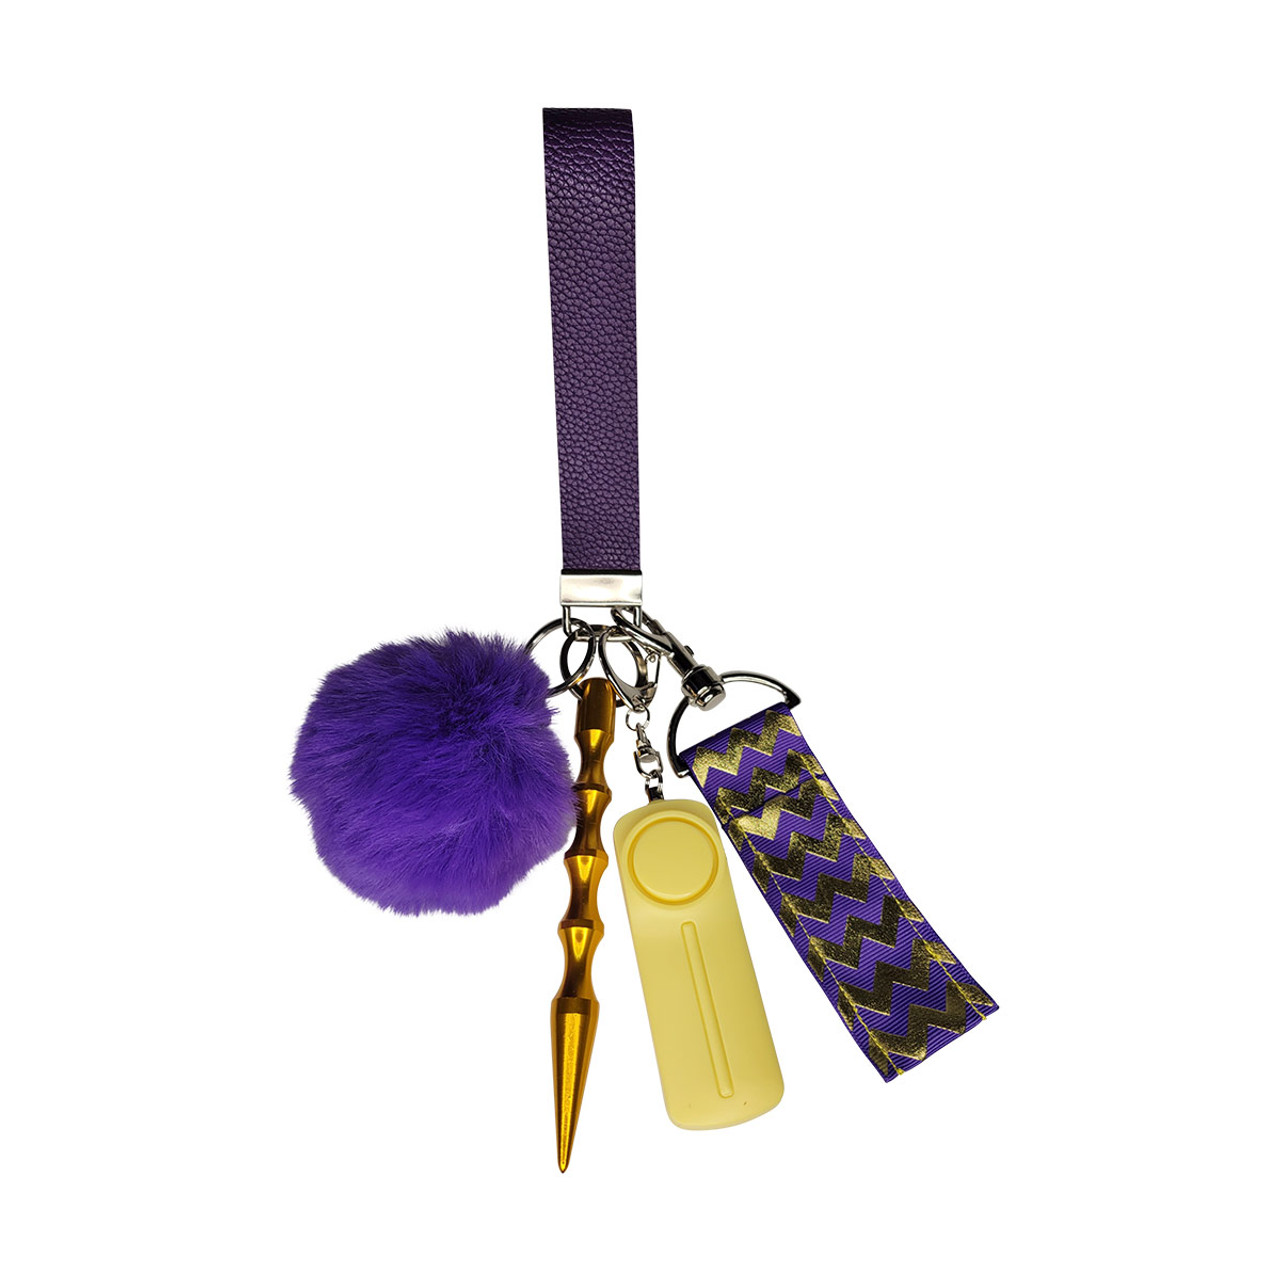 tragt eskortere dommer Self-defense safety keychain wristlet purple and Gold chevron purple pom  pom puff ball personal alarm gettin lippy